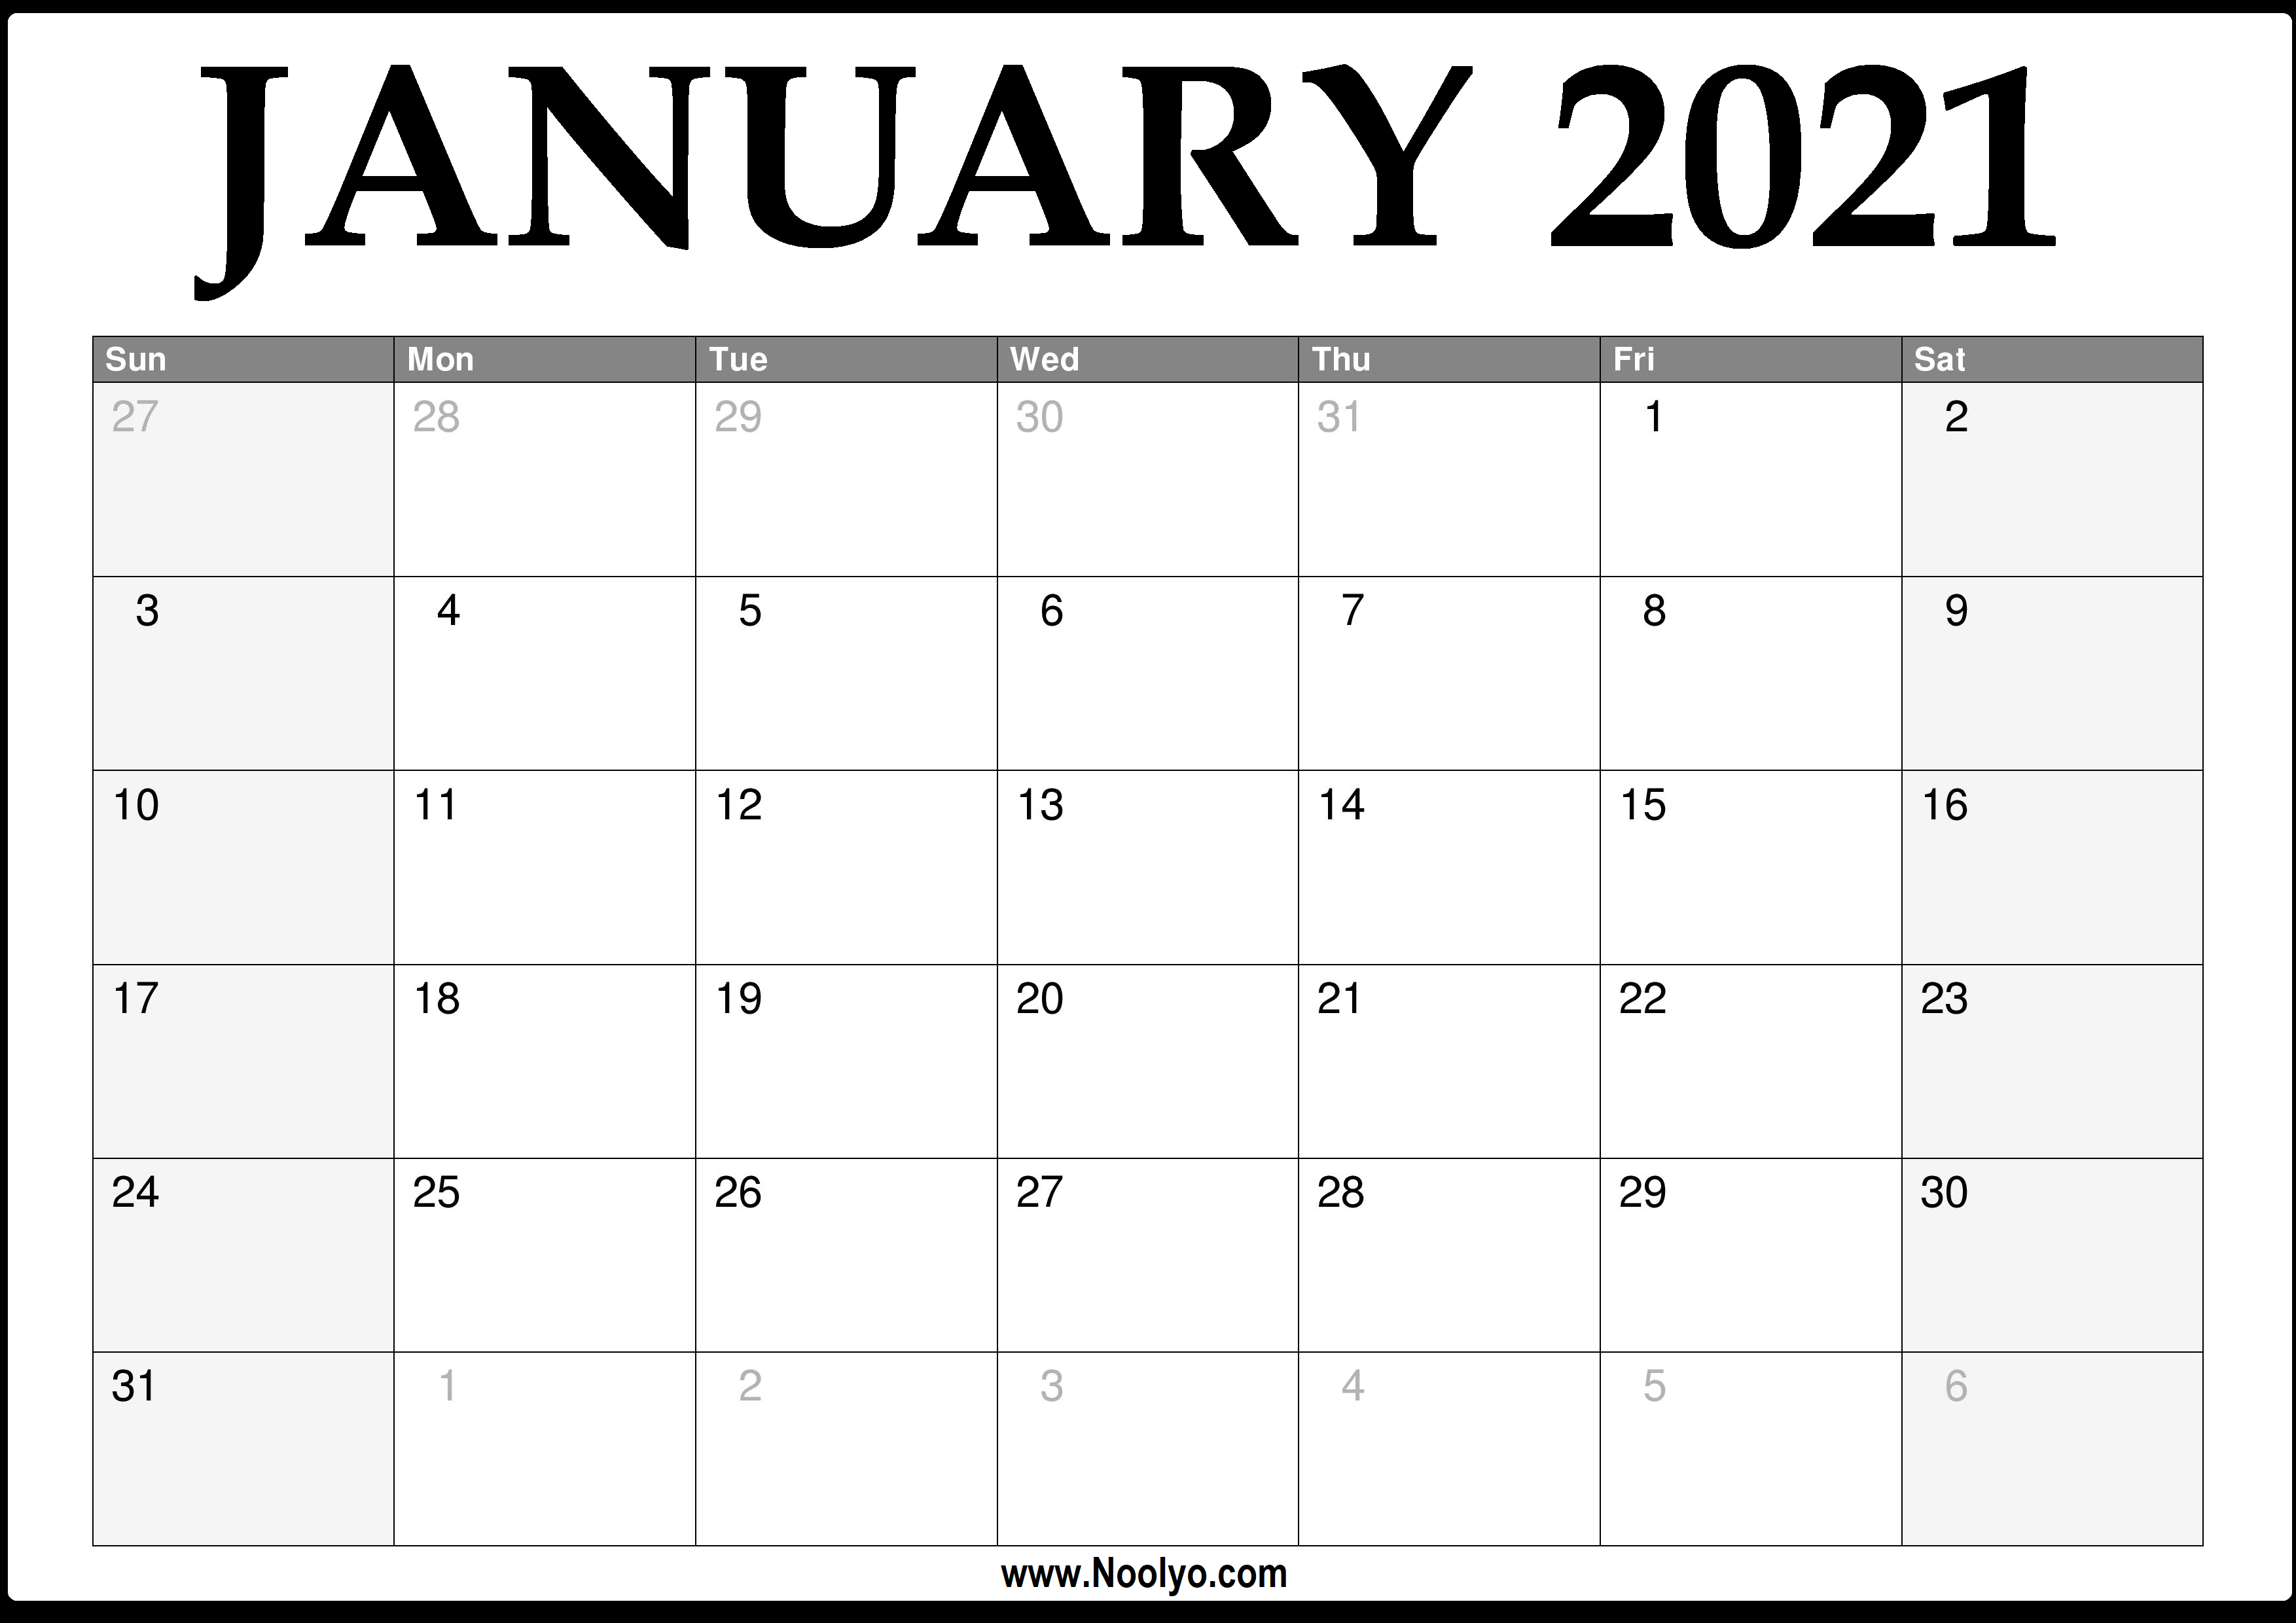 January-2021-Calendar-Printable-Blank01